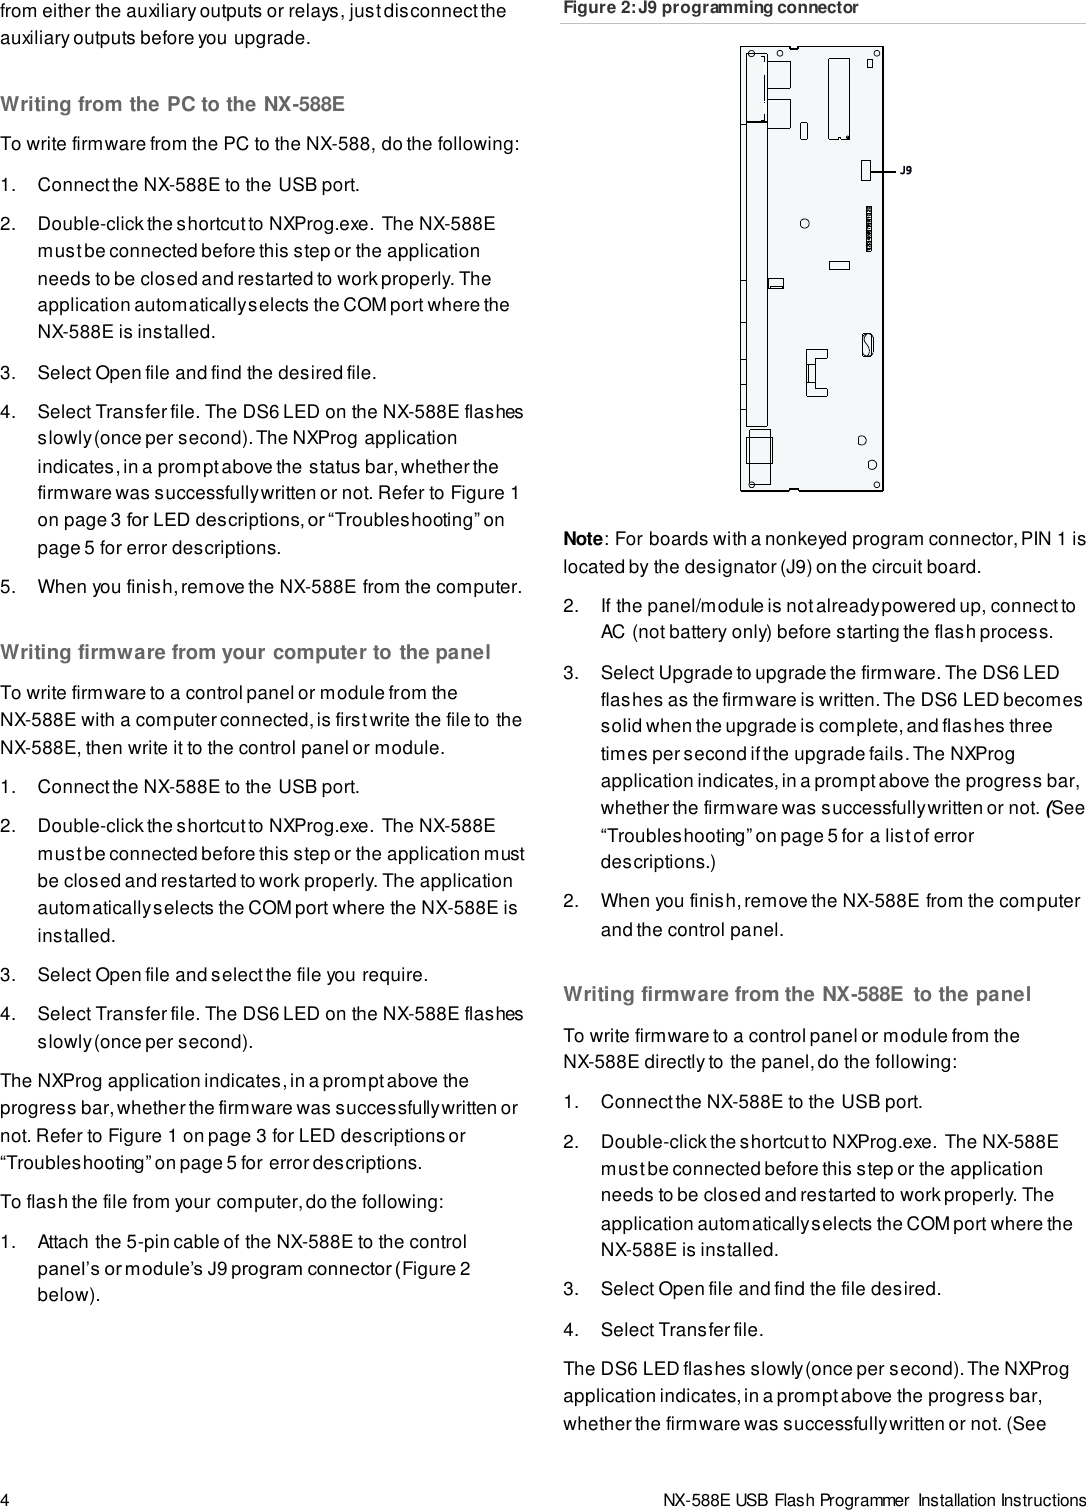 Page 4 of 5 - NX-588E USB Flash Programmer Installation Instructions  466-2257 REV C